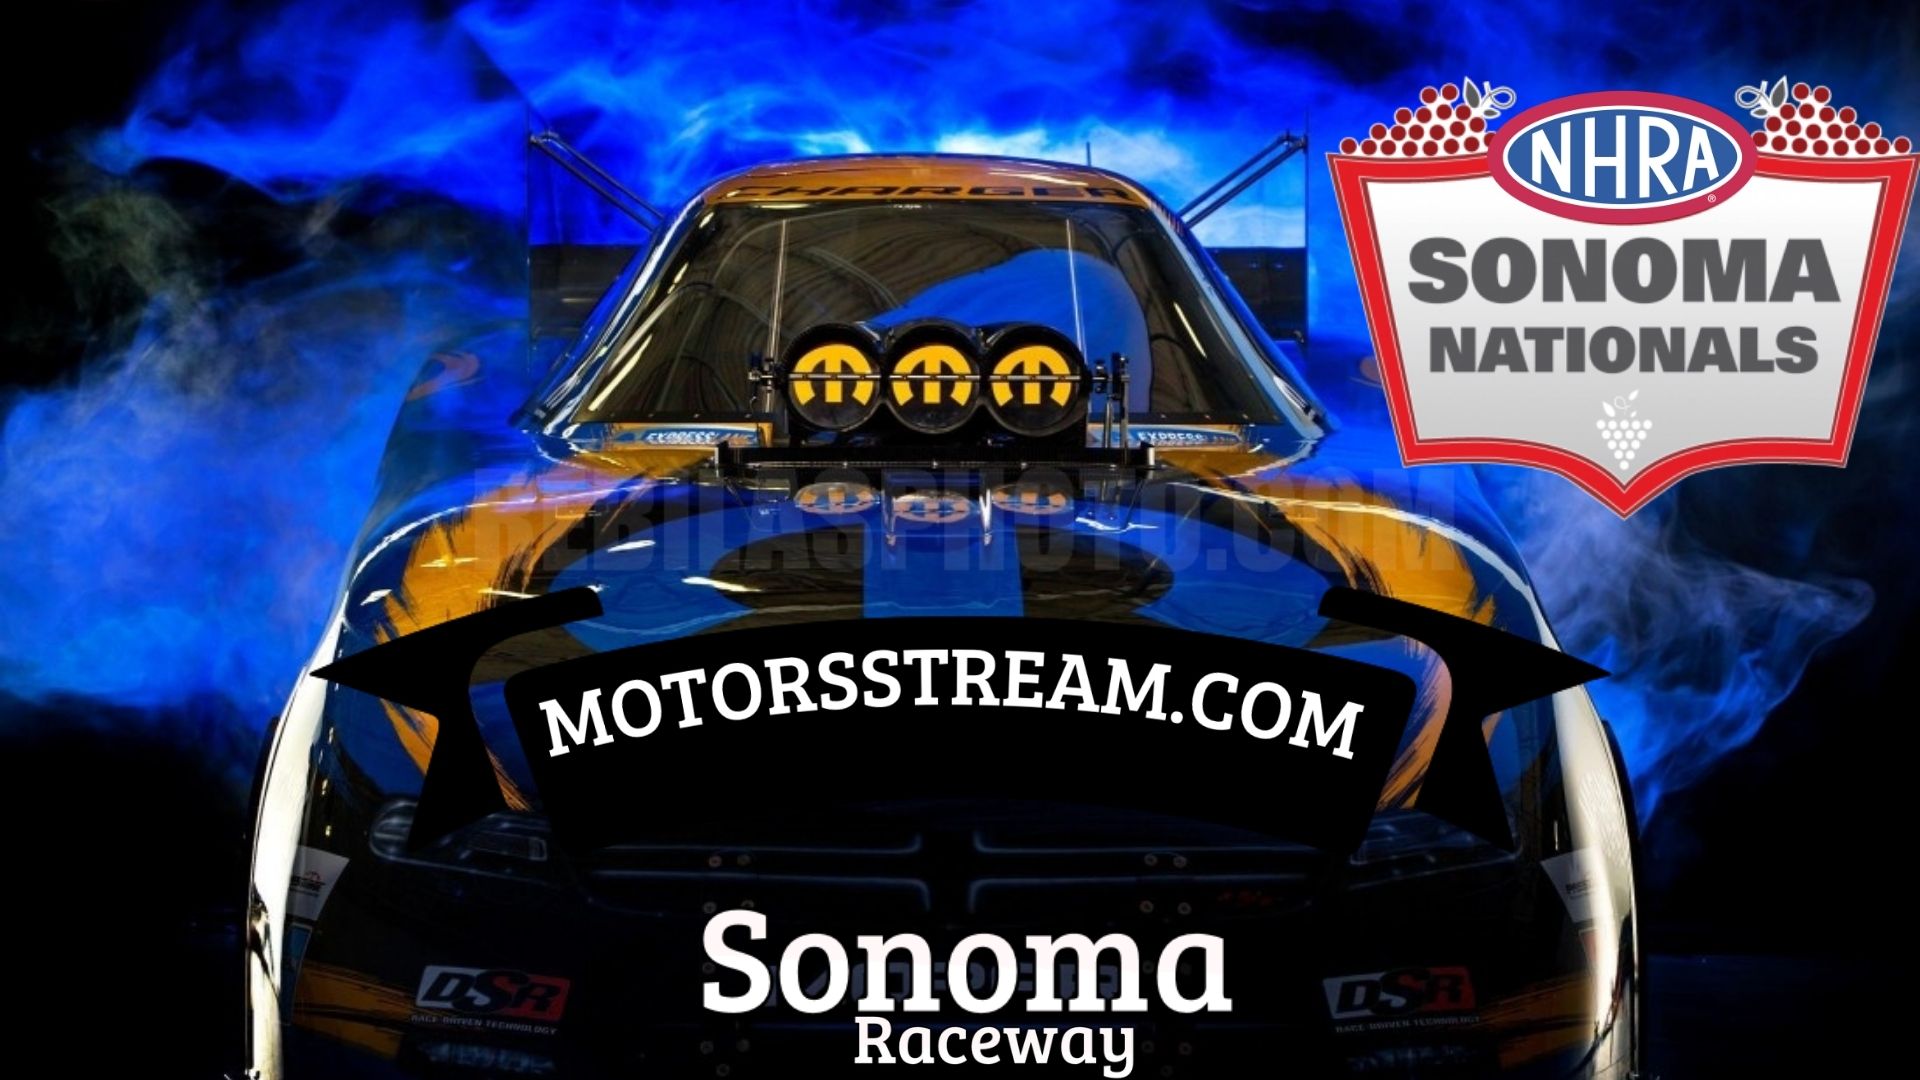 Live Toyota NHRA Sonoma Nationals Streaming